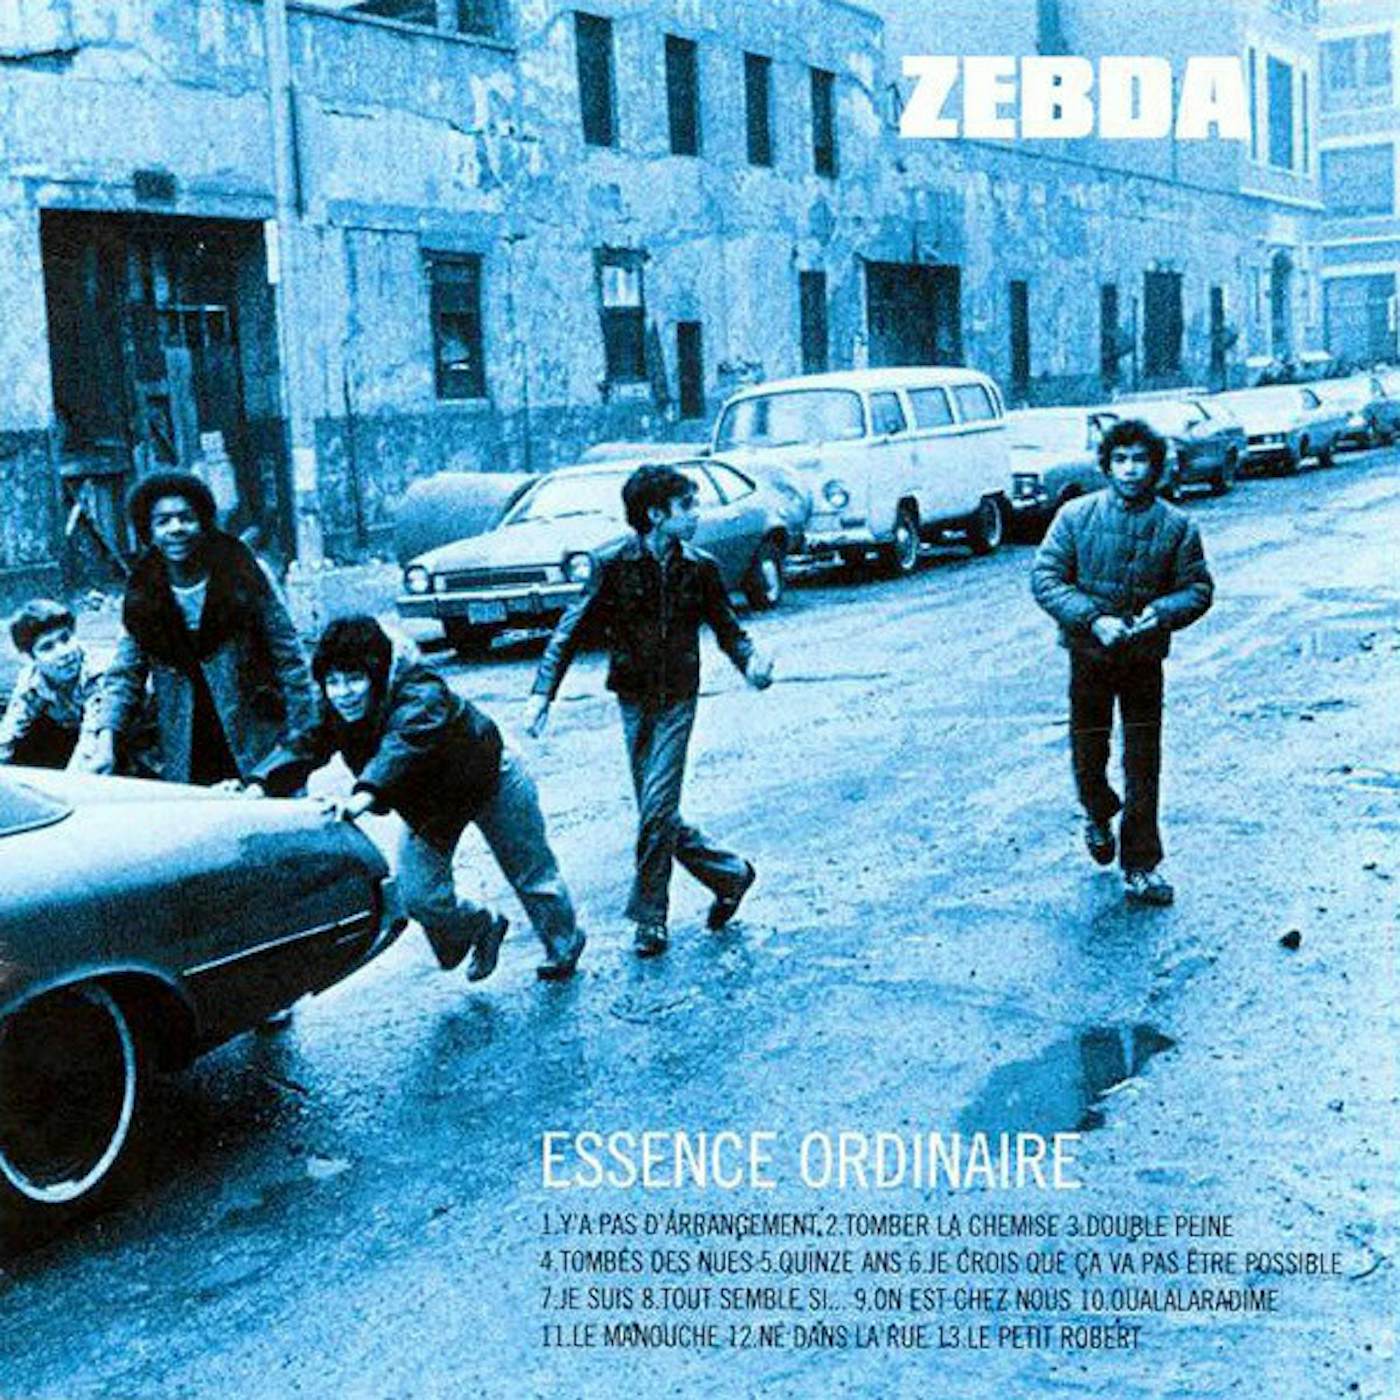 Zebda Essence Ordinaire Vinyl Record